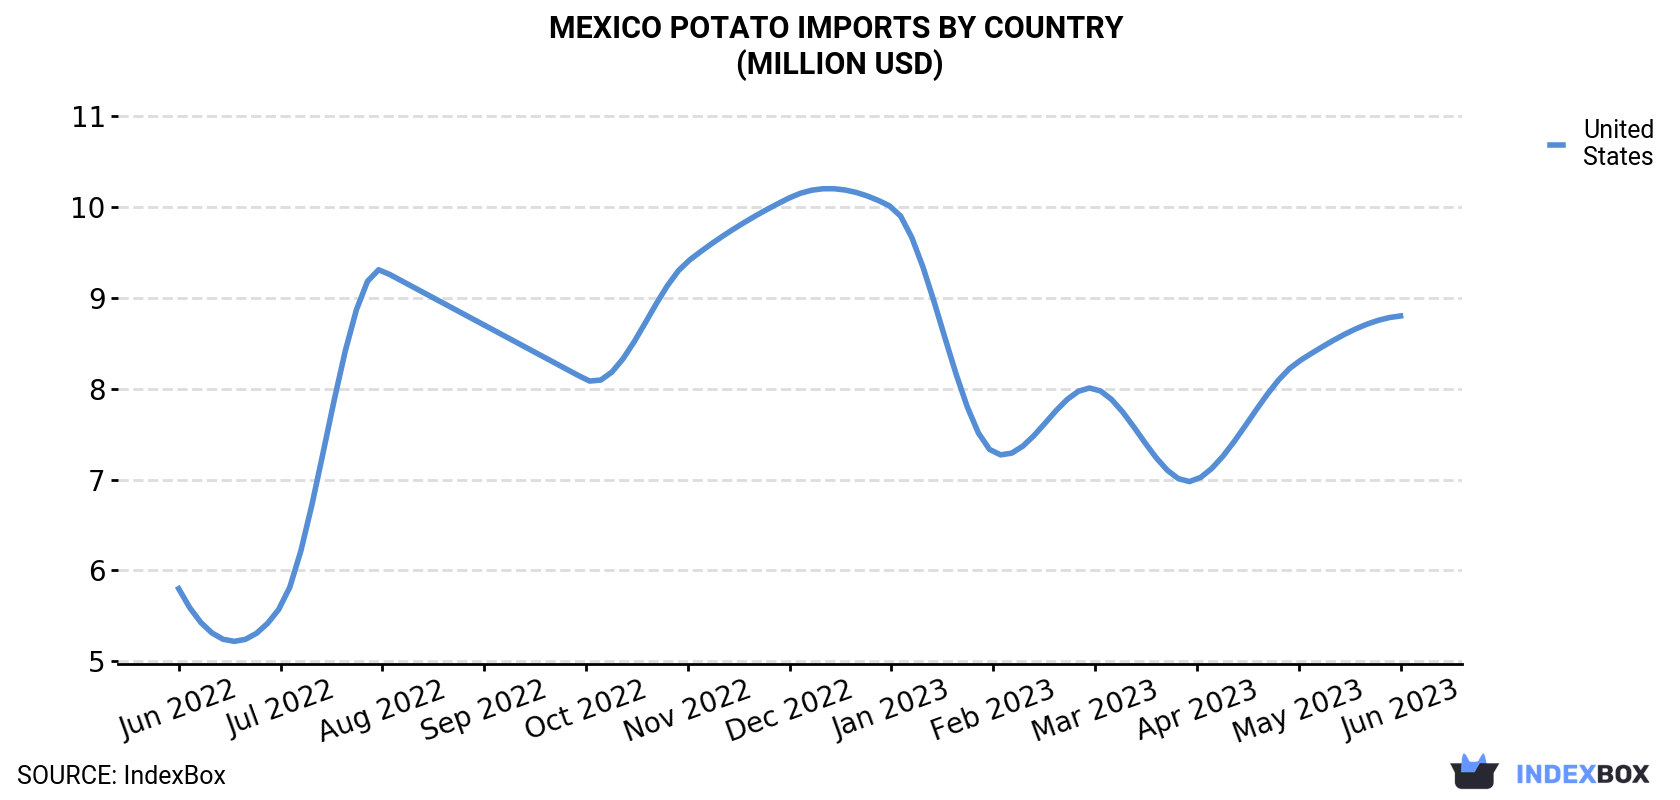 Mexico Potato Imports By Country (Million USD)